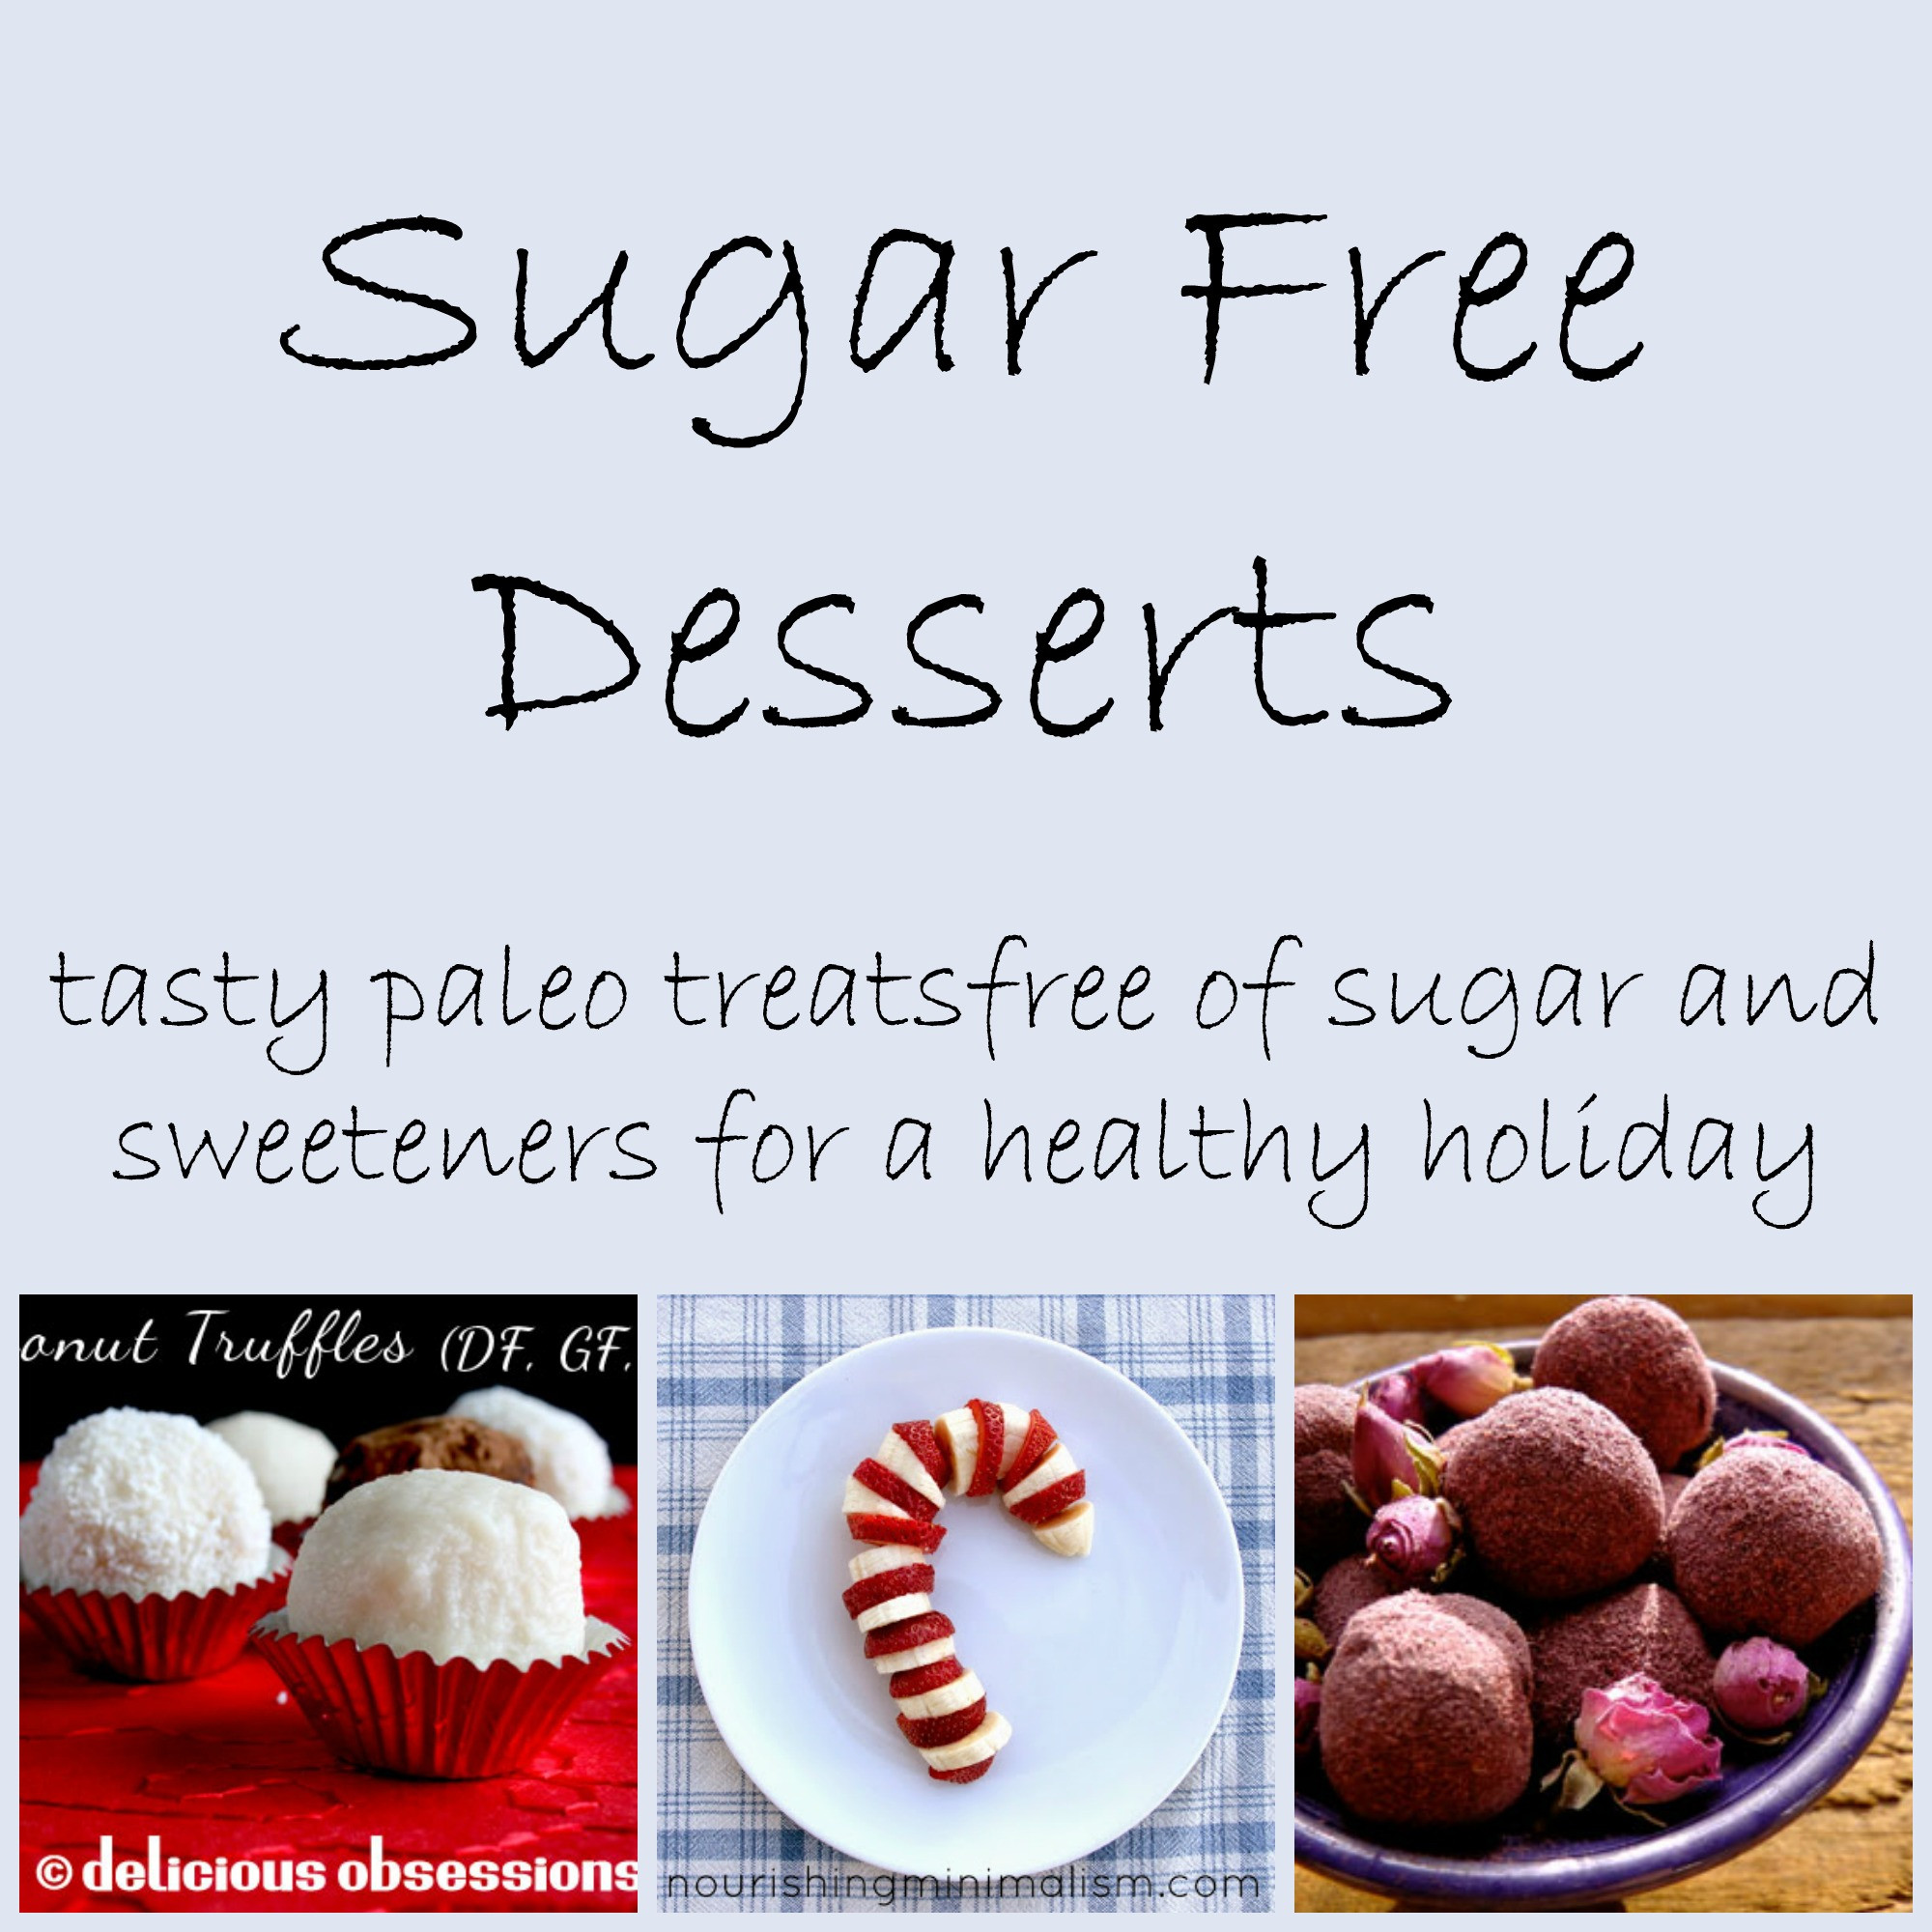 Healthy Sugar Free Desserts
 Sugar Free Desserts Healthy and Delicious Treats